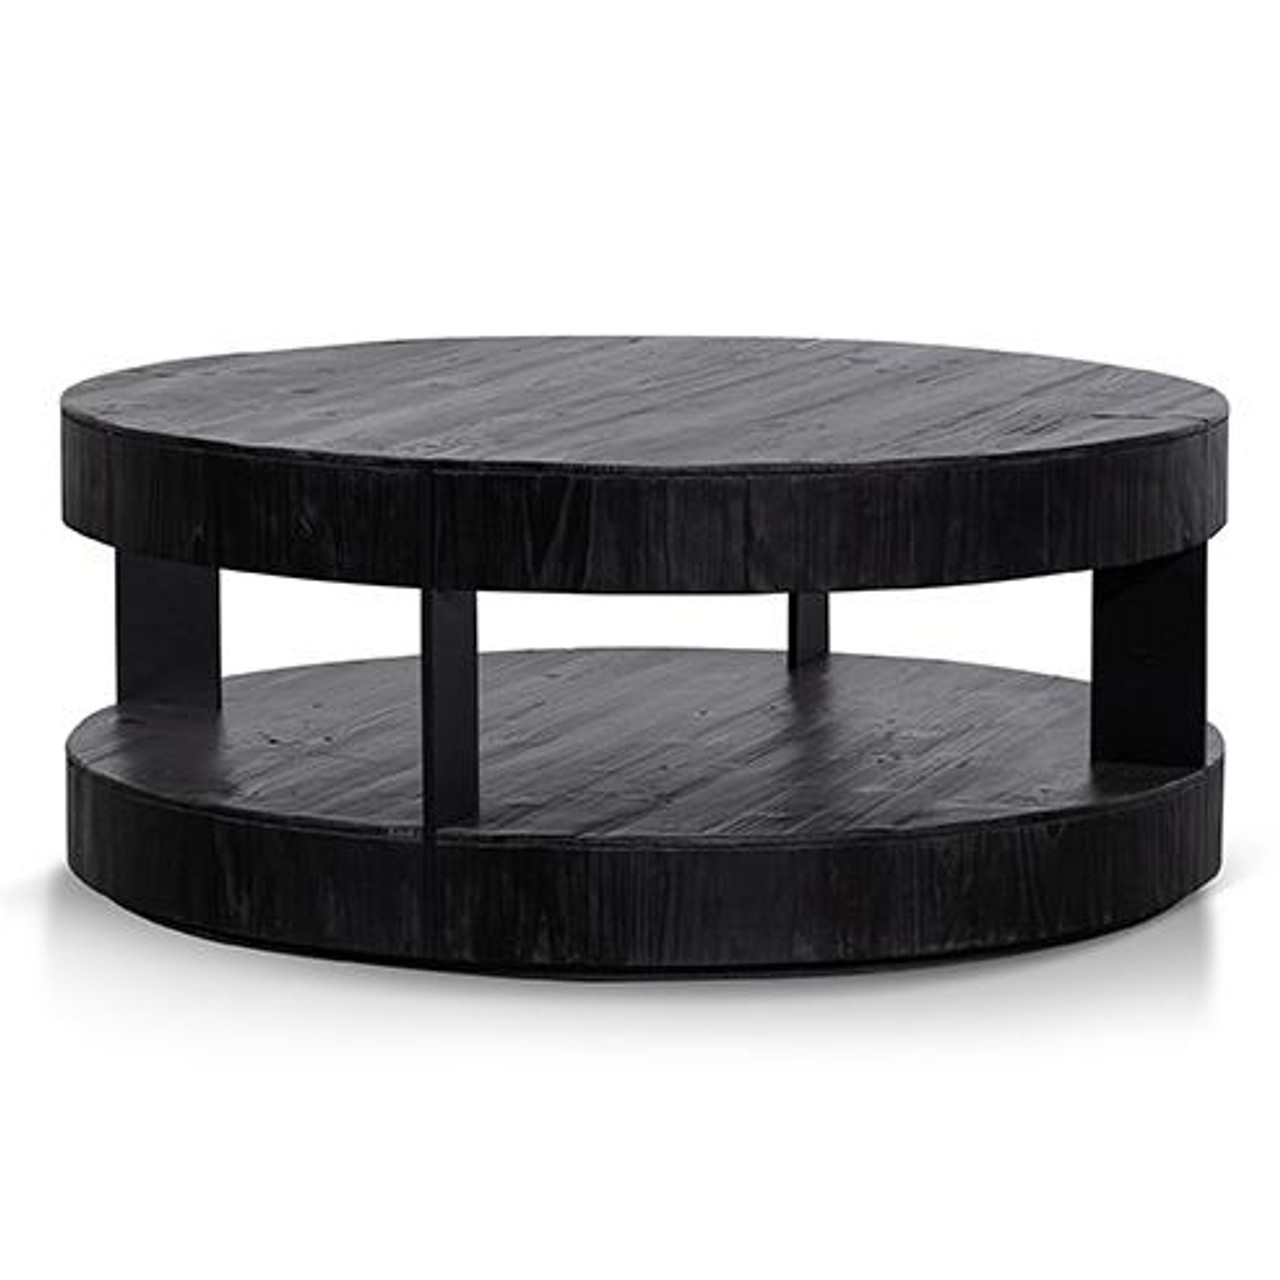 Ballogie 100cm Round Coffee Table - Full Black